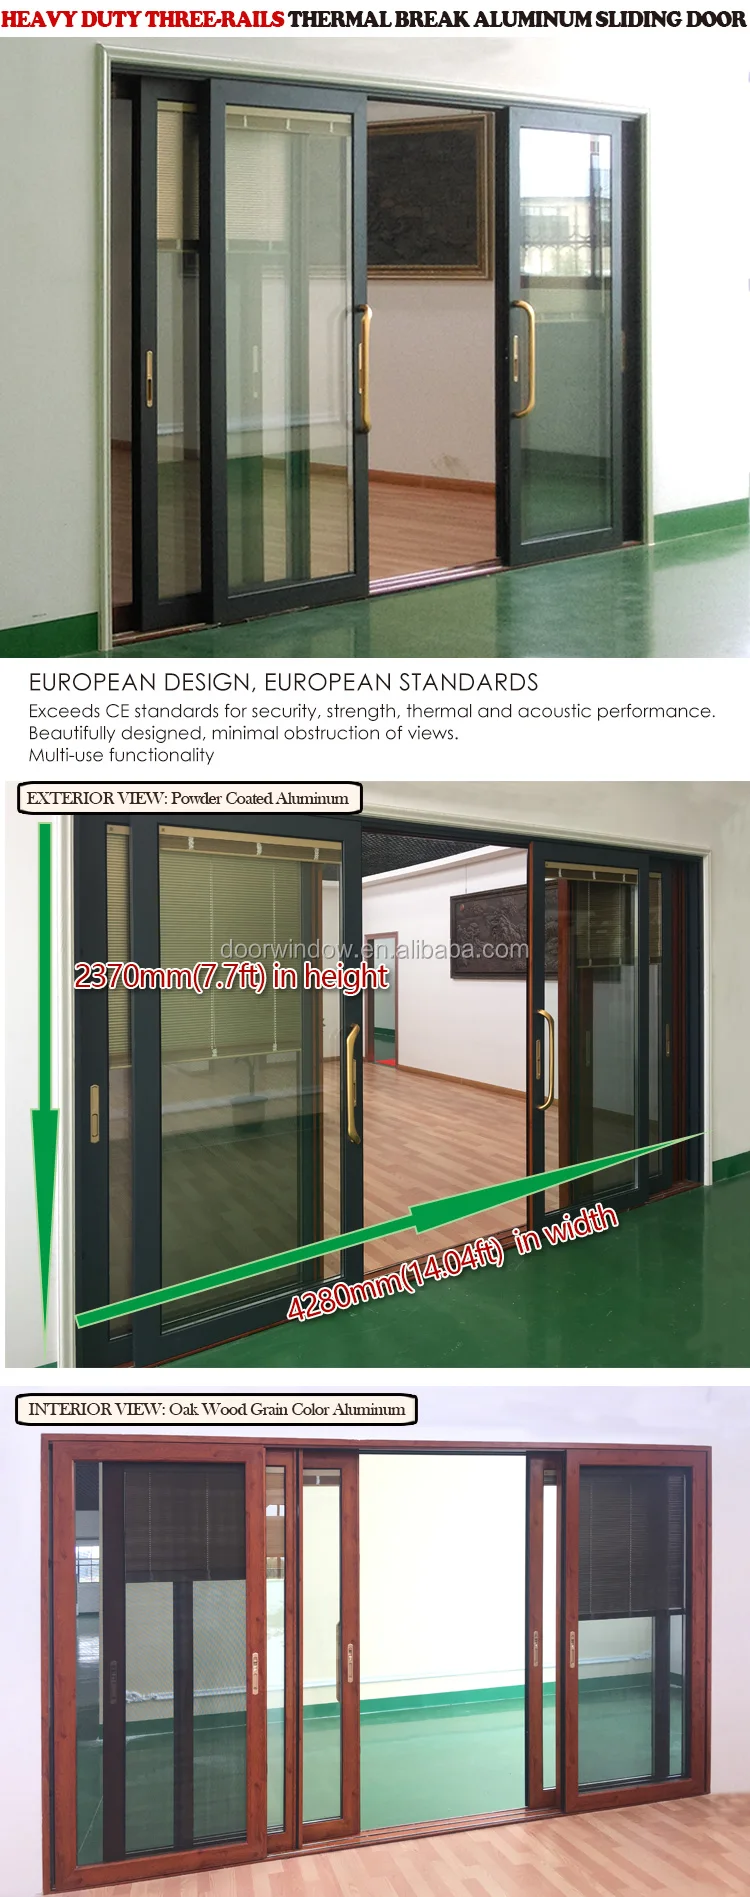 TEXAS LA popular interior french doors sliding room doors with built in shutter hotel sliding glass doors